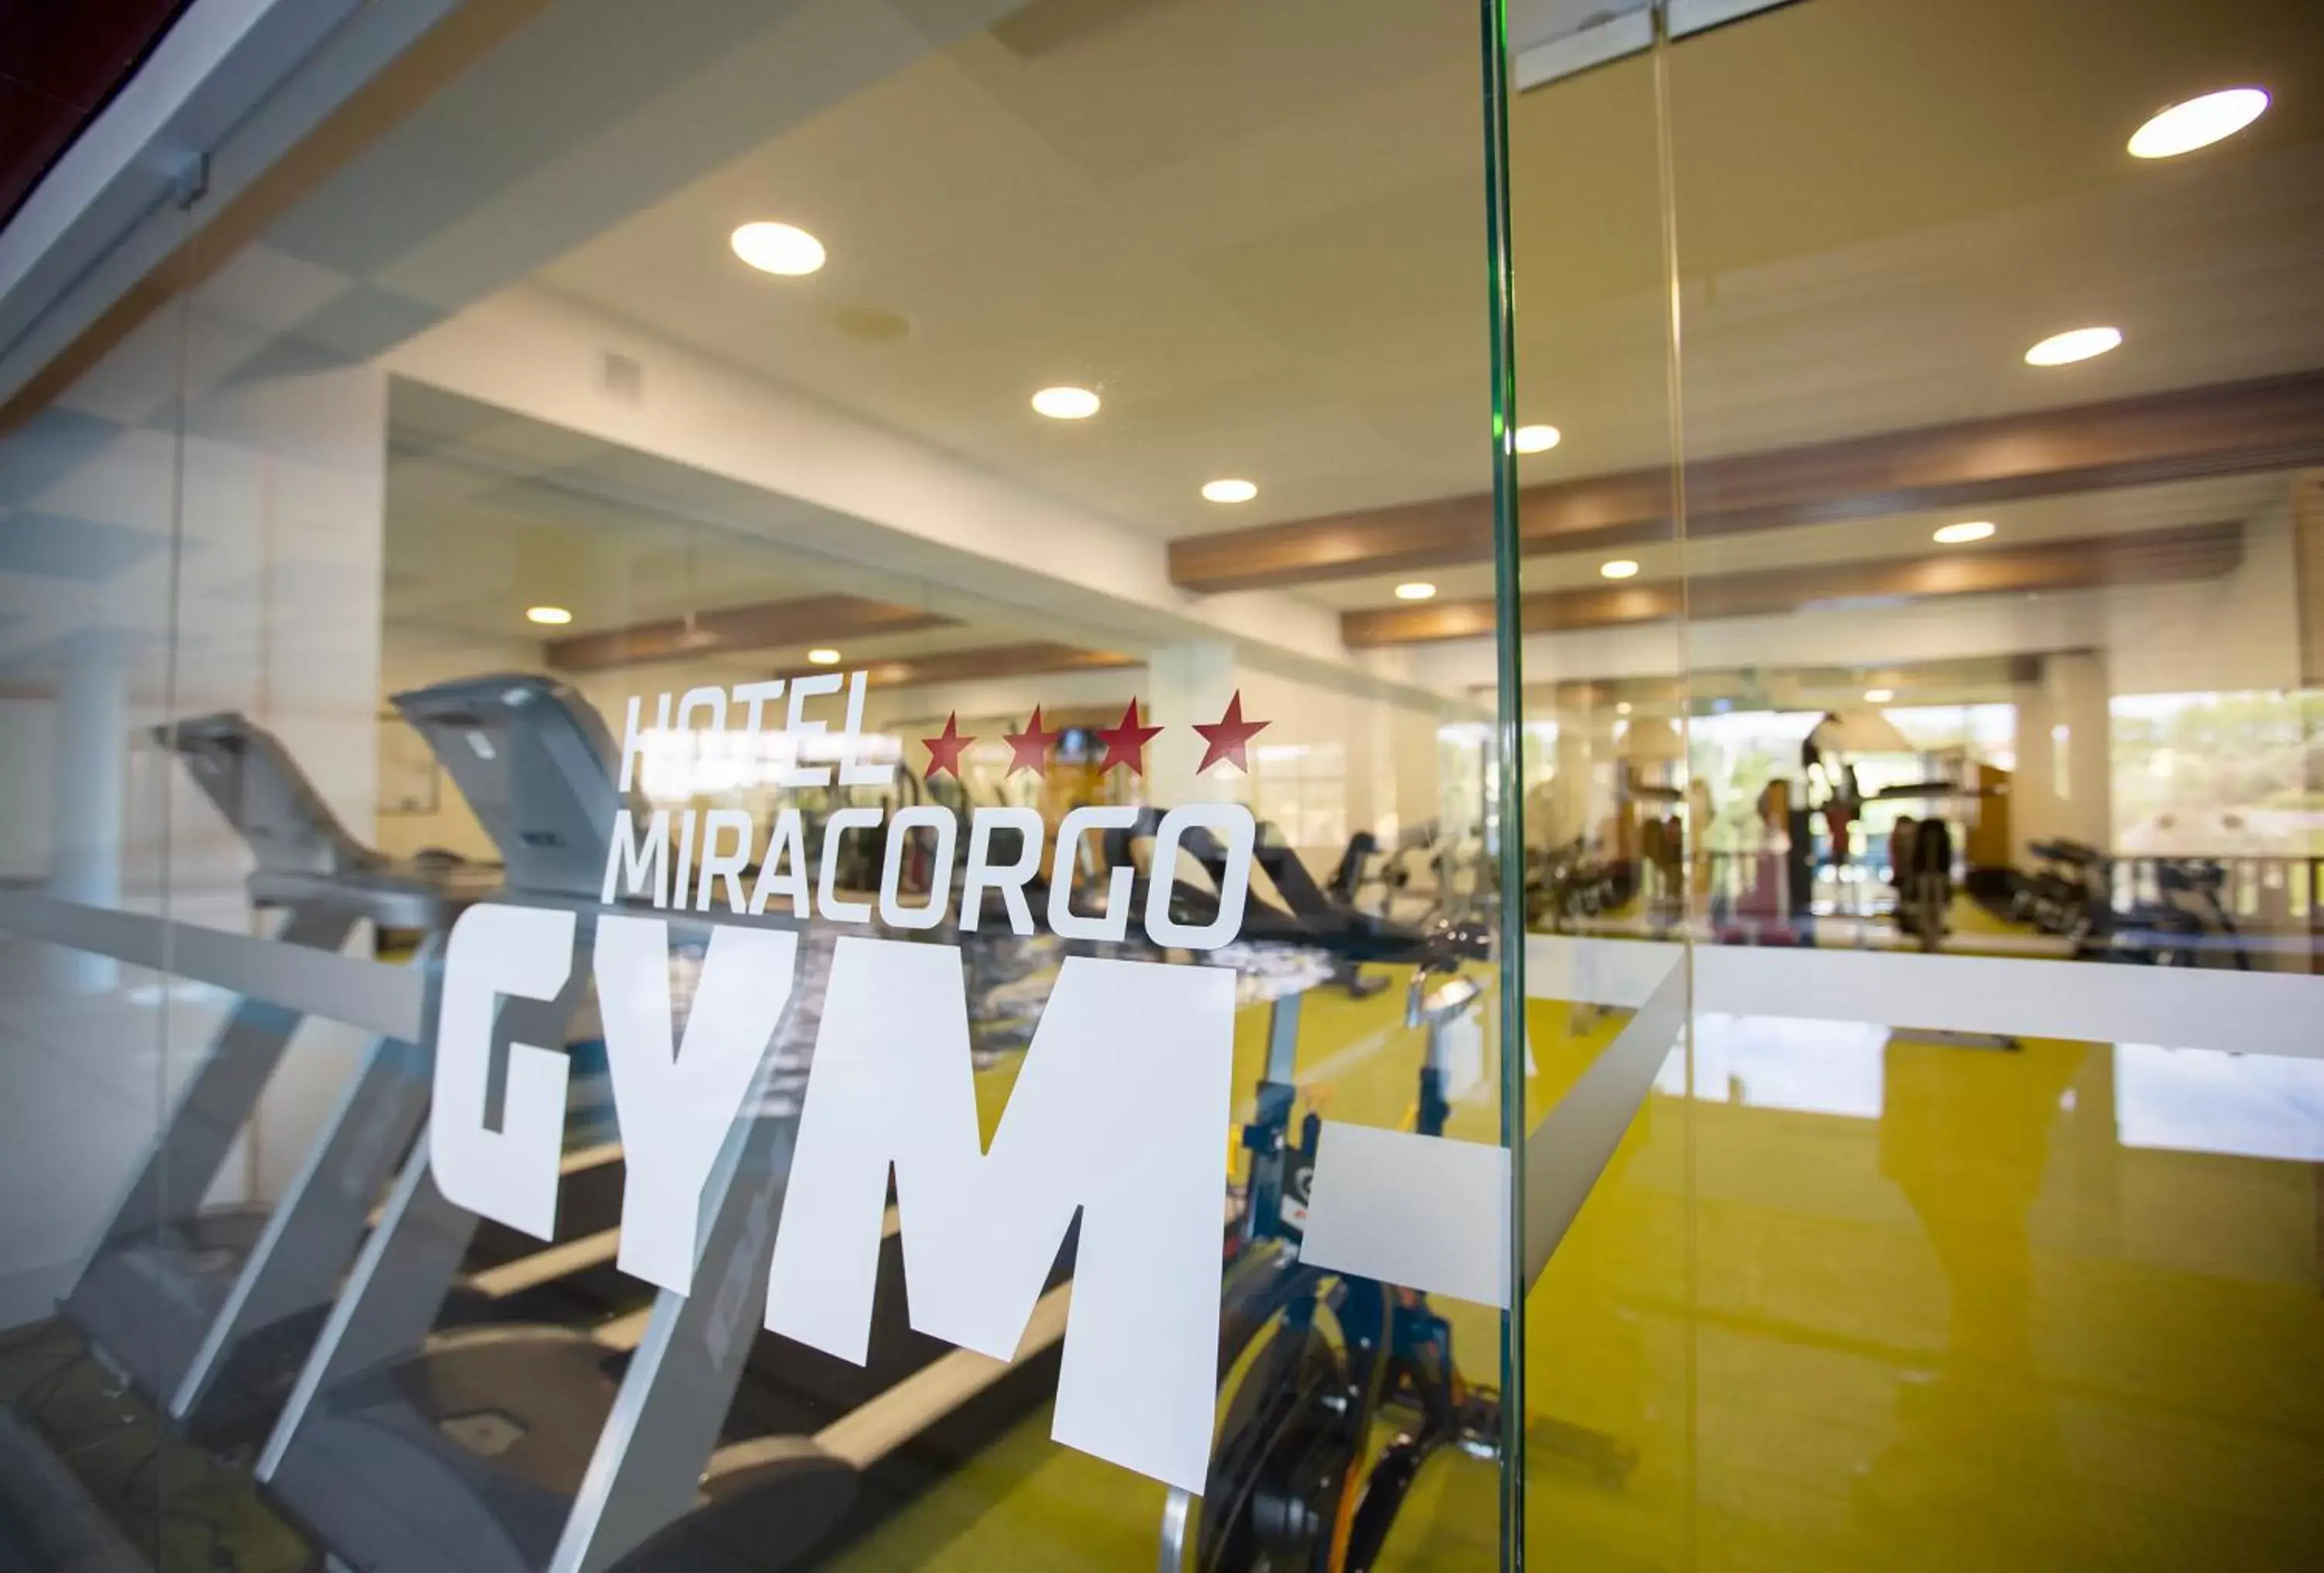 Fitness centre/facilities in Hotel Miracorgo